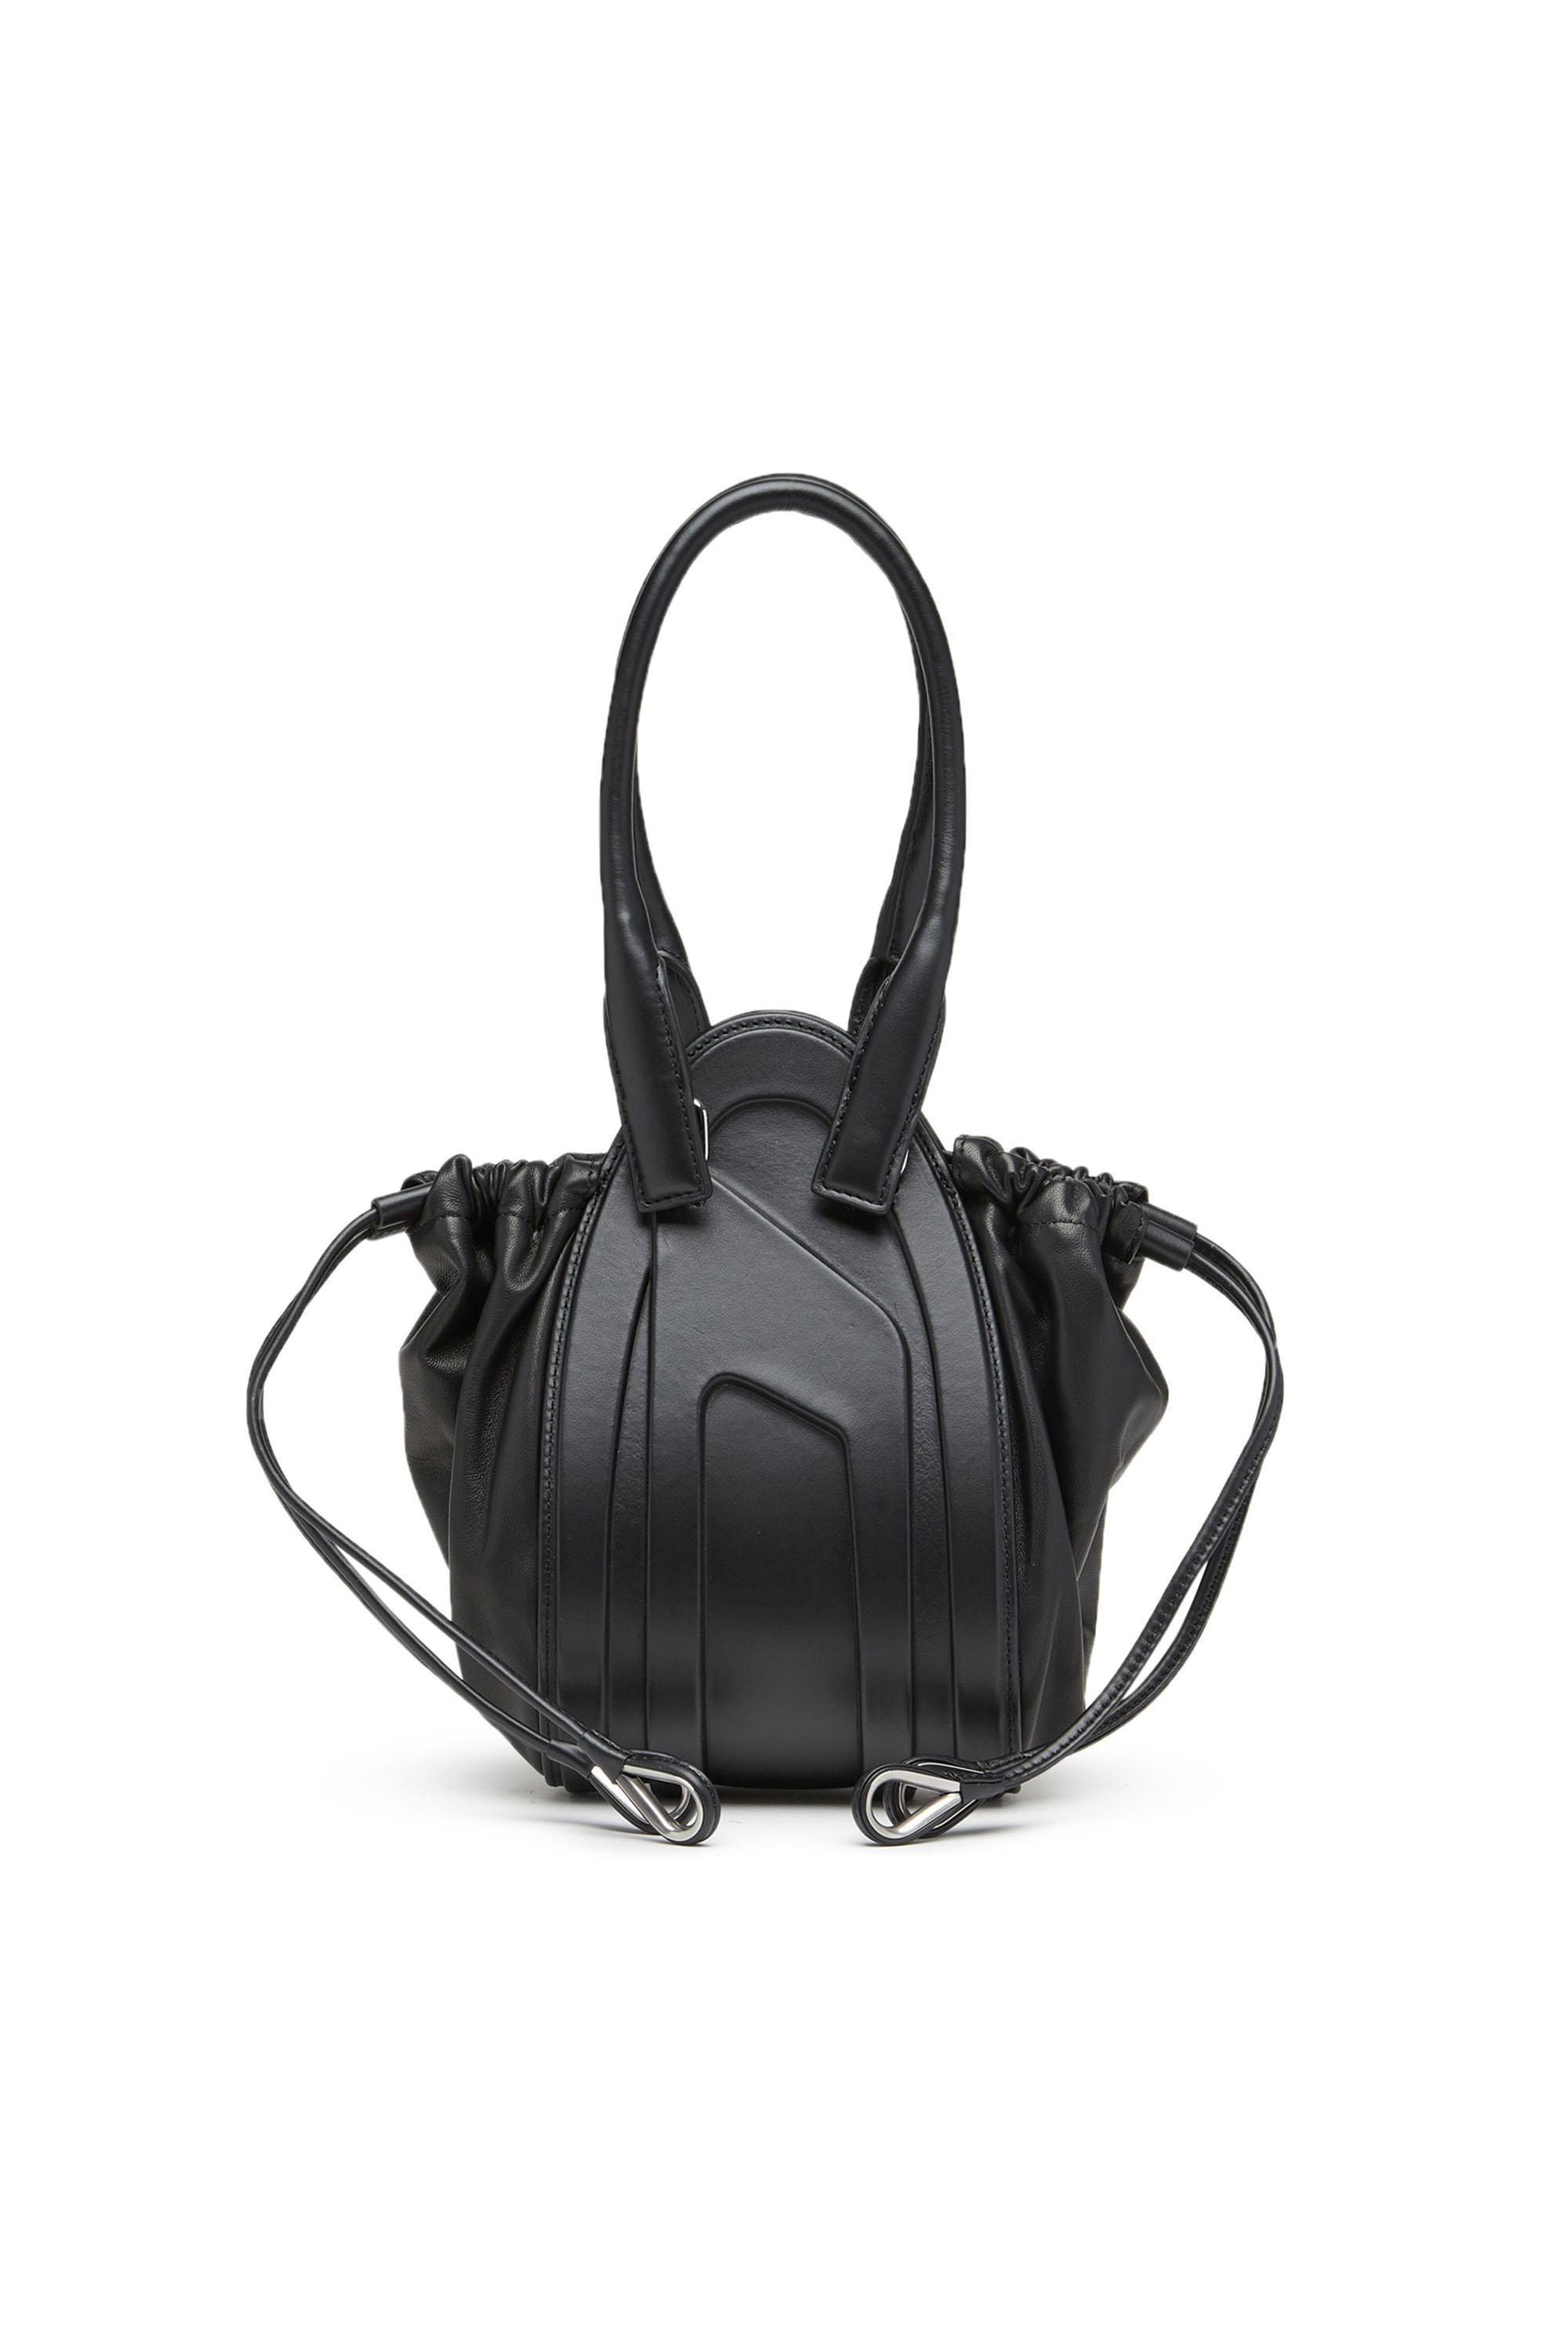 Diesel - 1DR-FOLD XS, Woman 1DR-Fold XS-Oval logo handbag in nappa leather in Black - Image 2